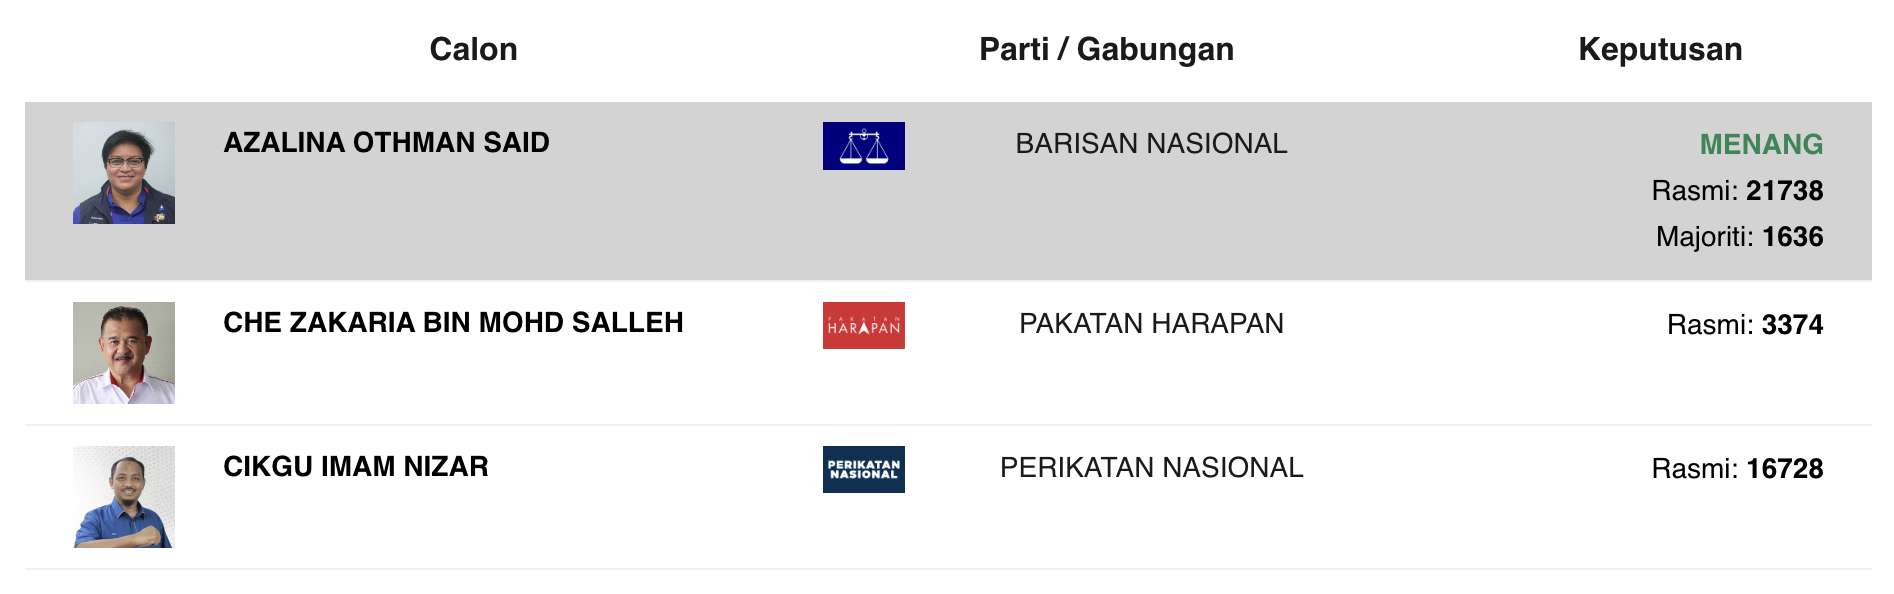 #GE15 : Azalina Othman du BN remporte le siège de Pengerang